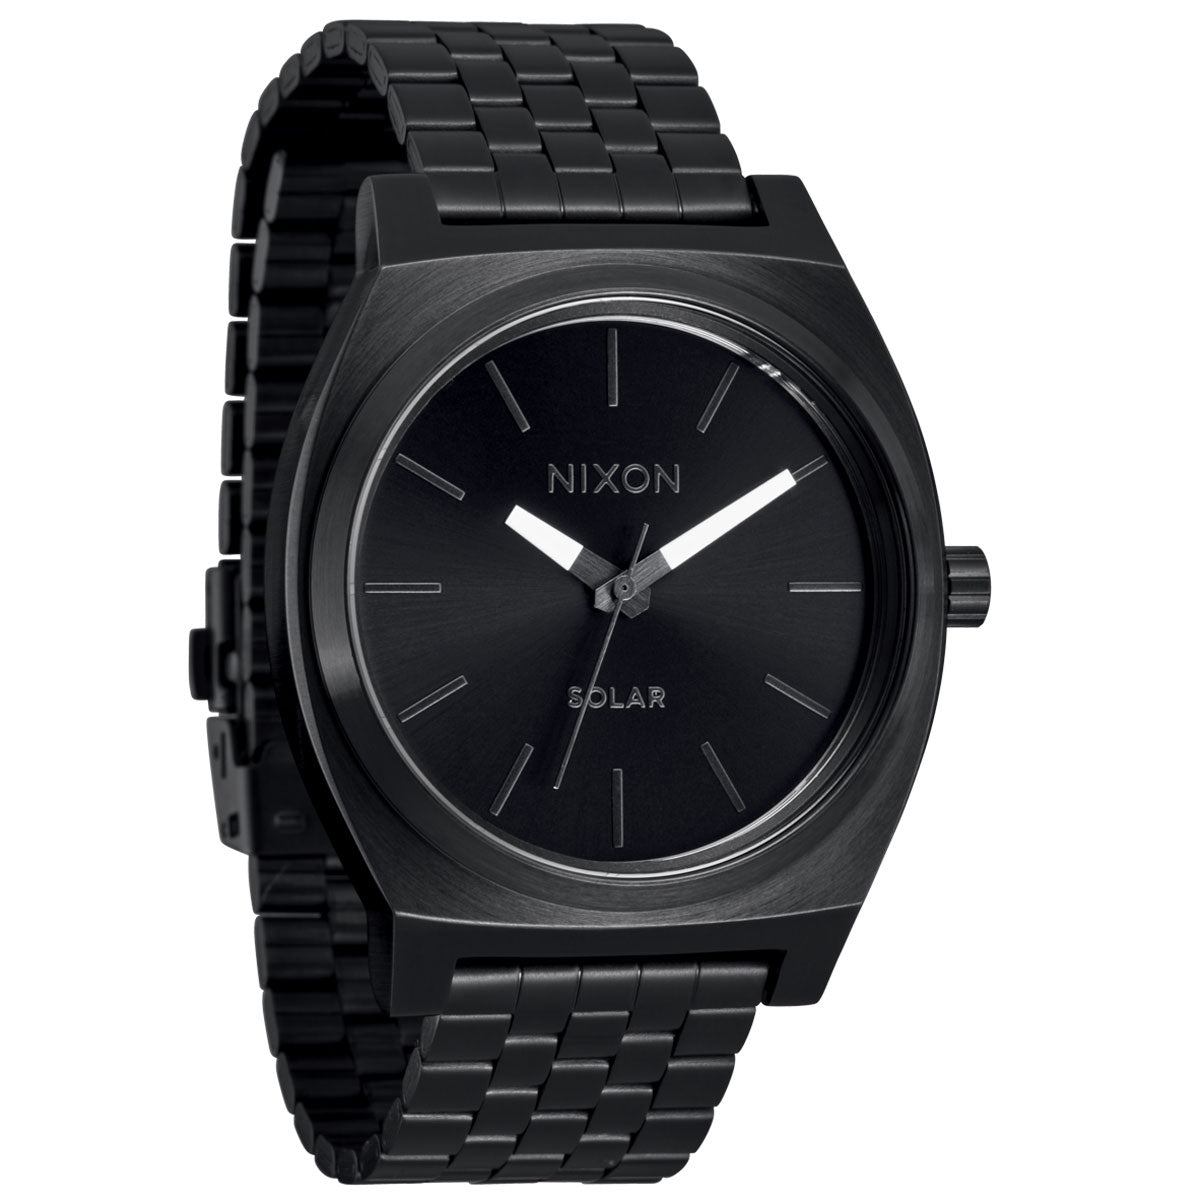 Nixon Time Teller Solar Watch - All Black/White image 4